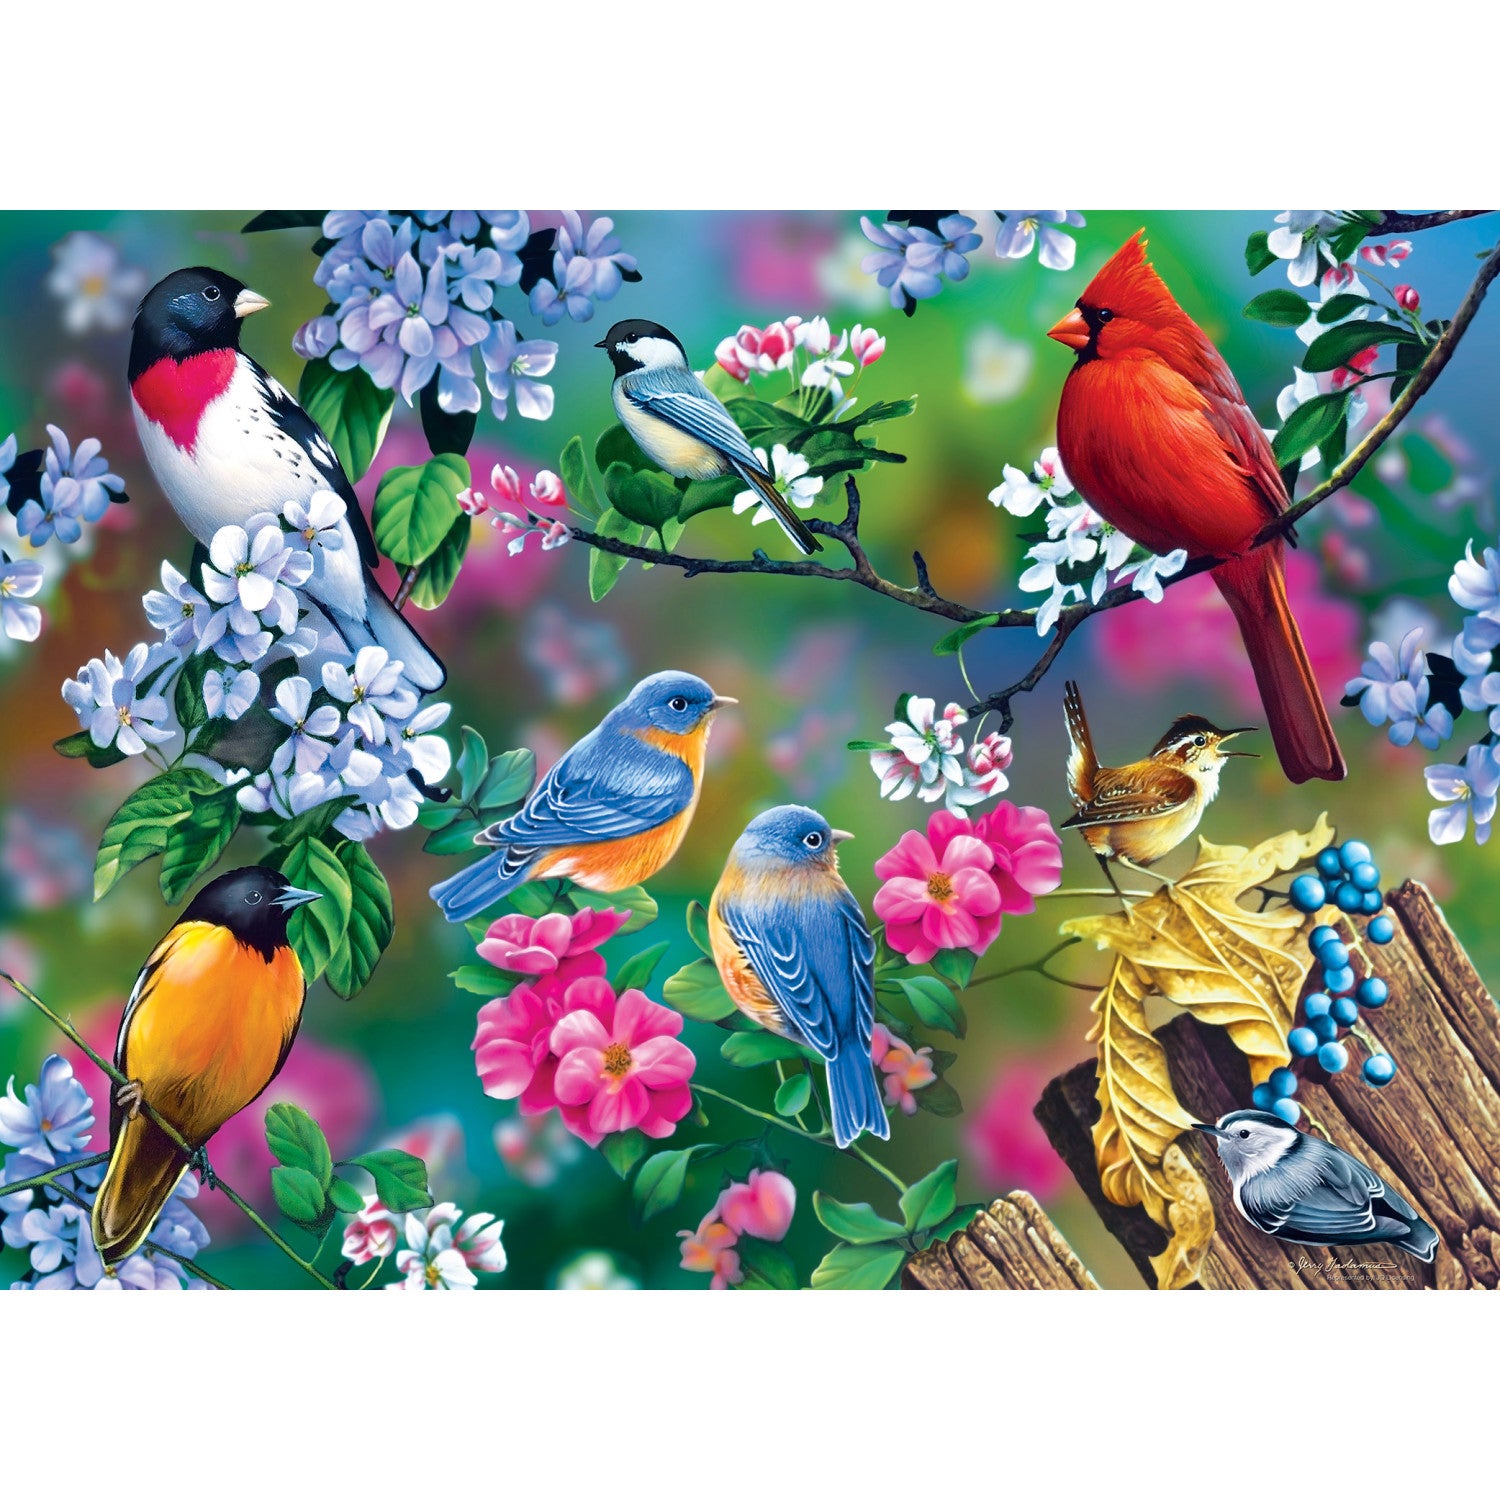 Audubon - Songbird Collage 1000 Piece Puzzle